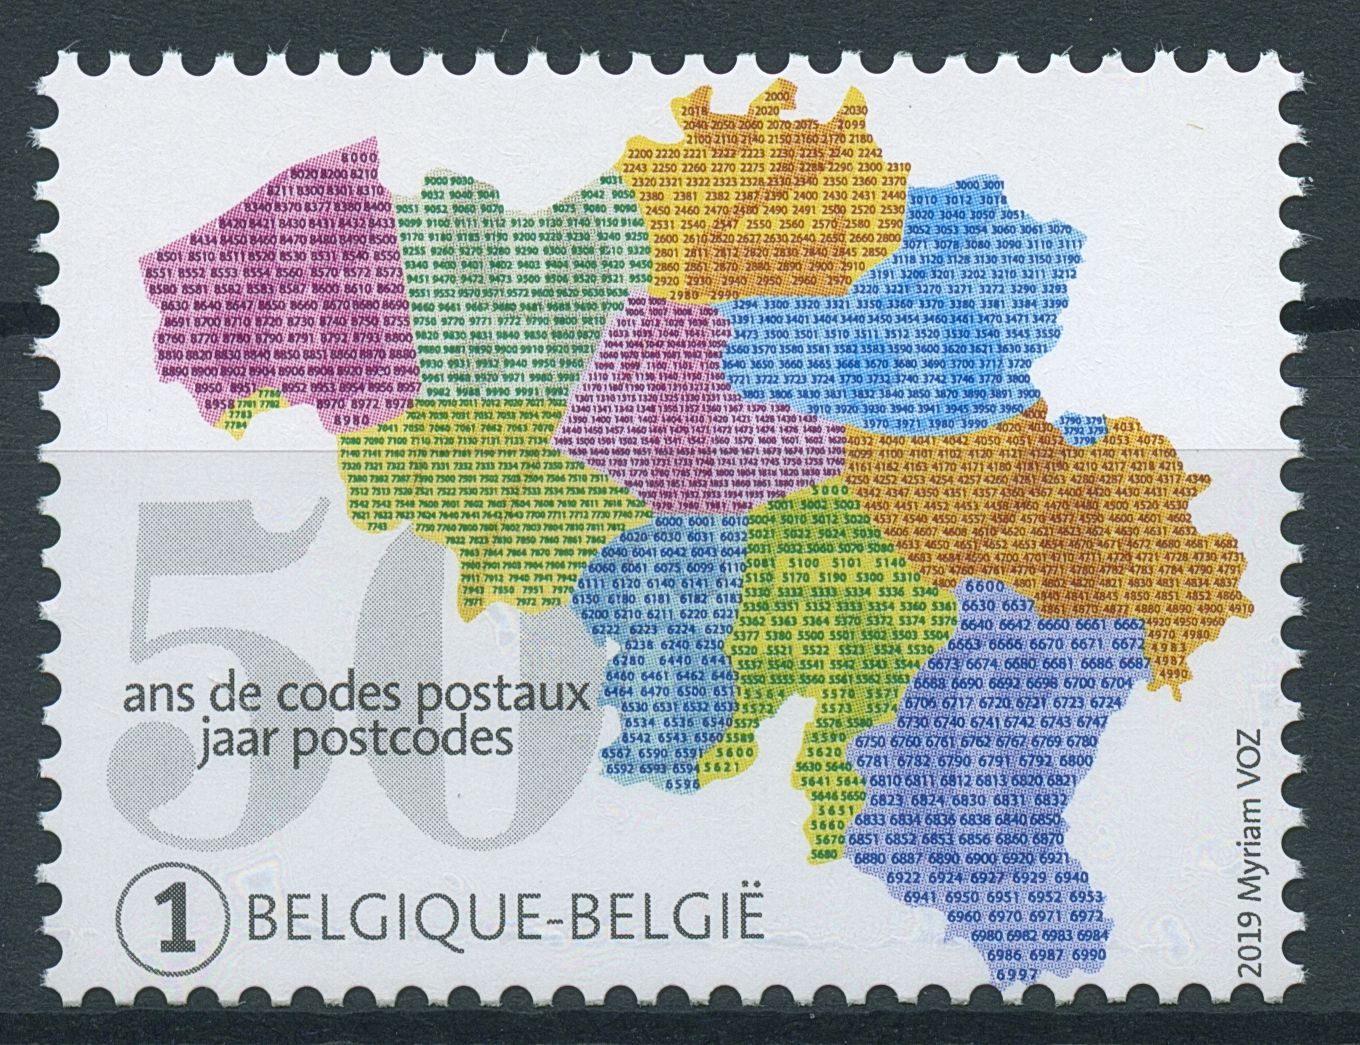 Belgium 2019 MNH Postal Codes 50 Years 1v Set Maps Postal Services Stamps